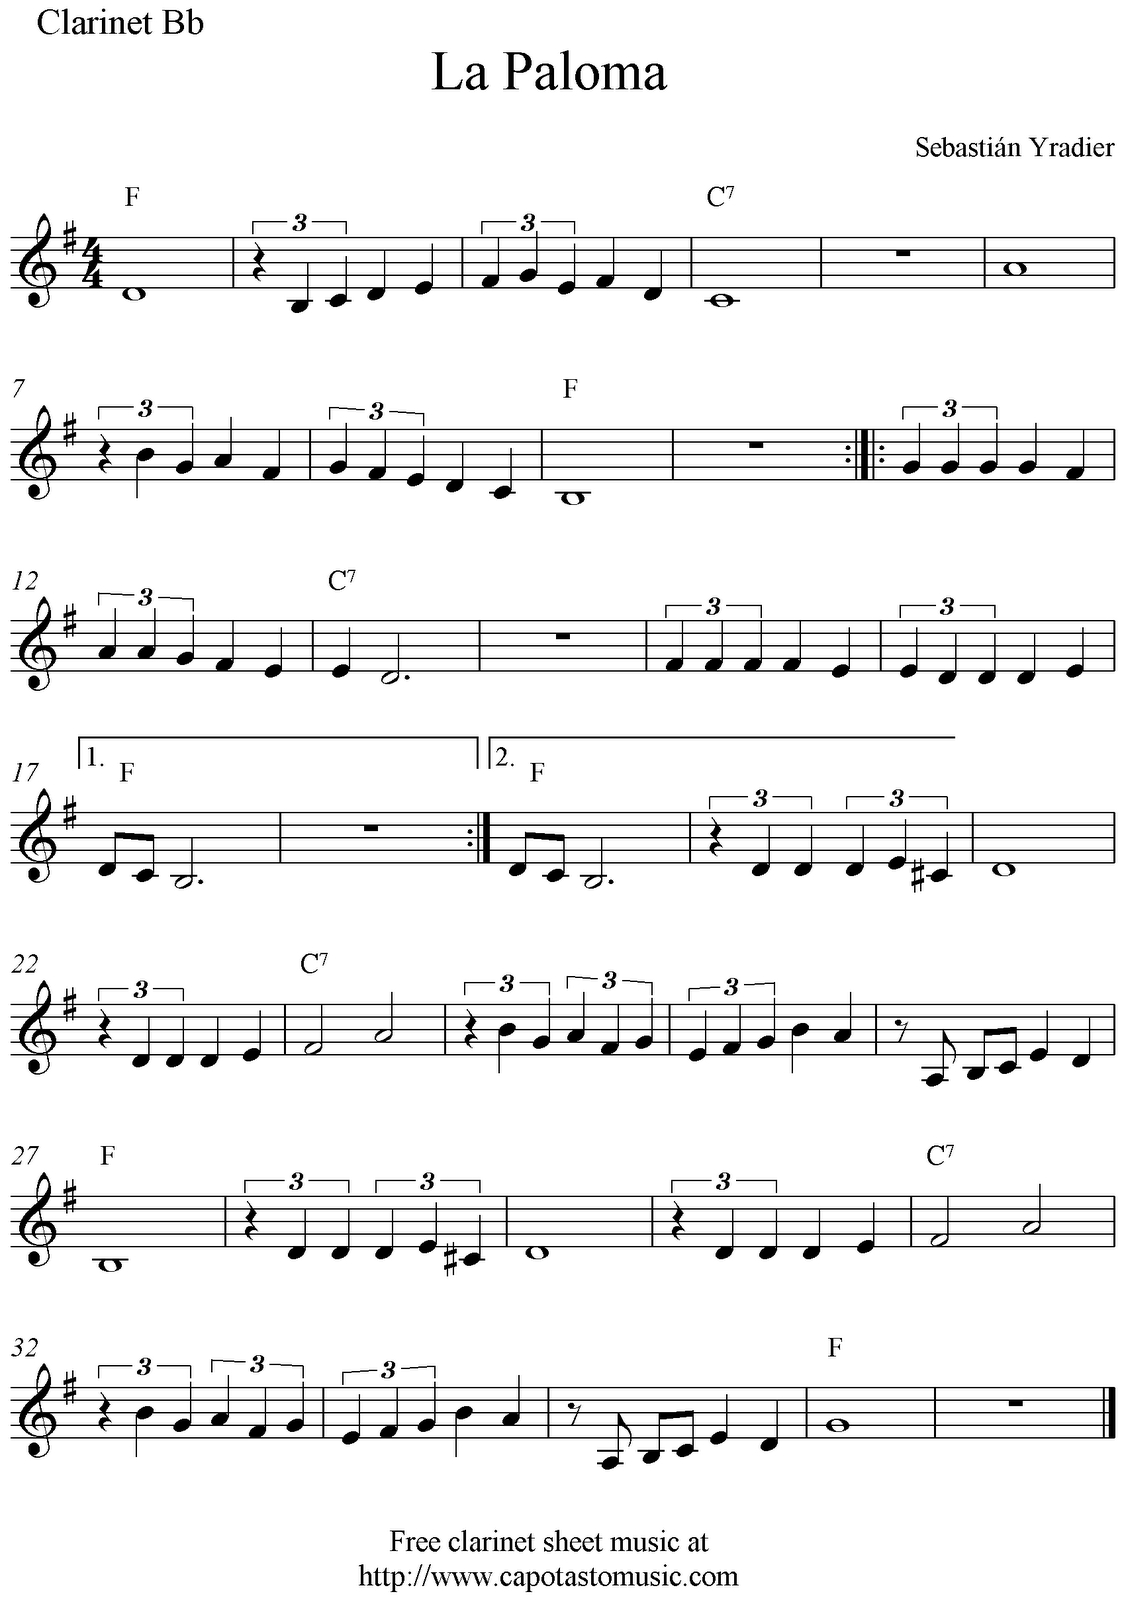 La Paloma, Free Clarinet Sheet Music Notes - Free Sheet Music For Clarinet Printable